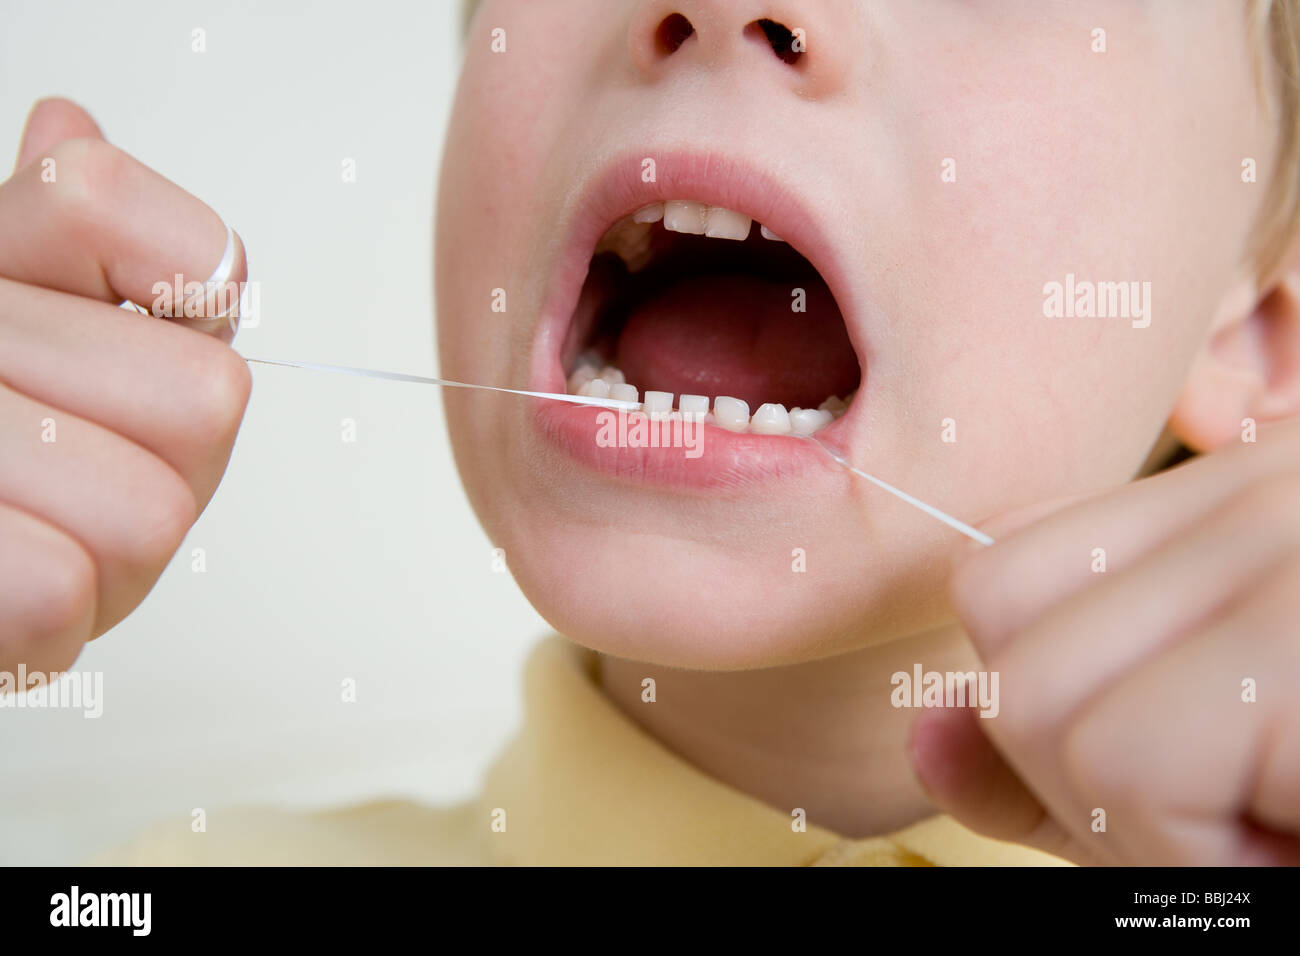 A Child using Dental Floss Stock Photo